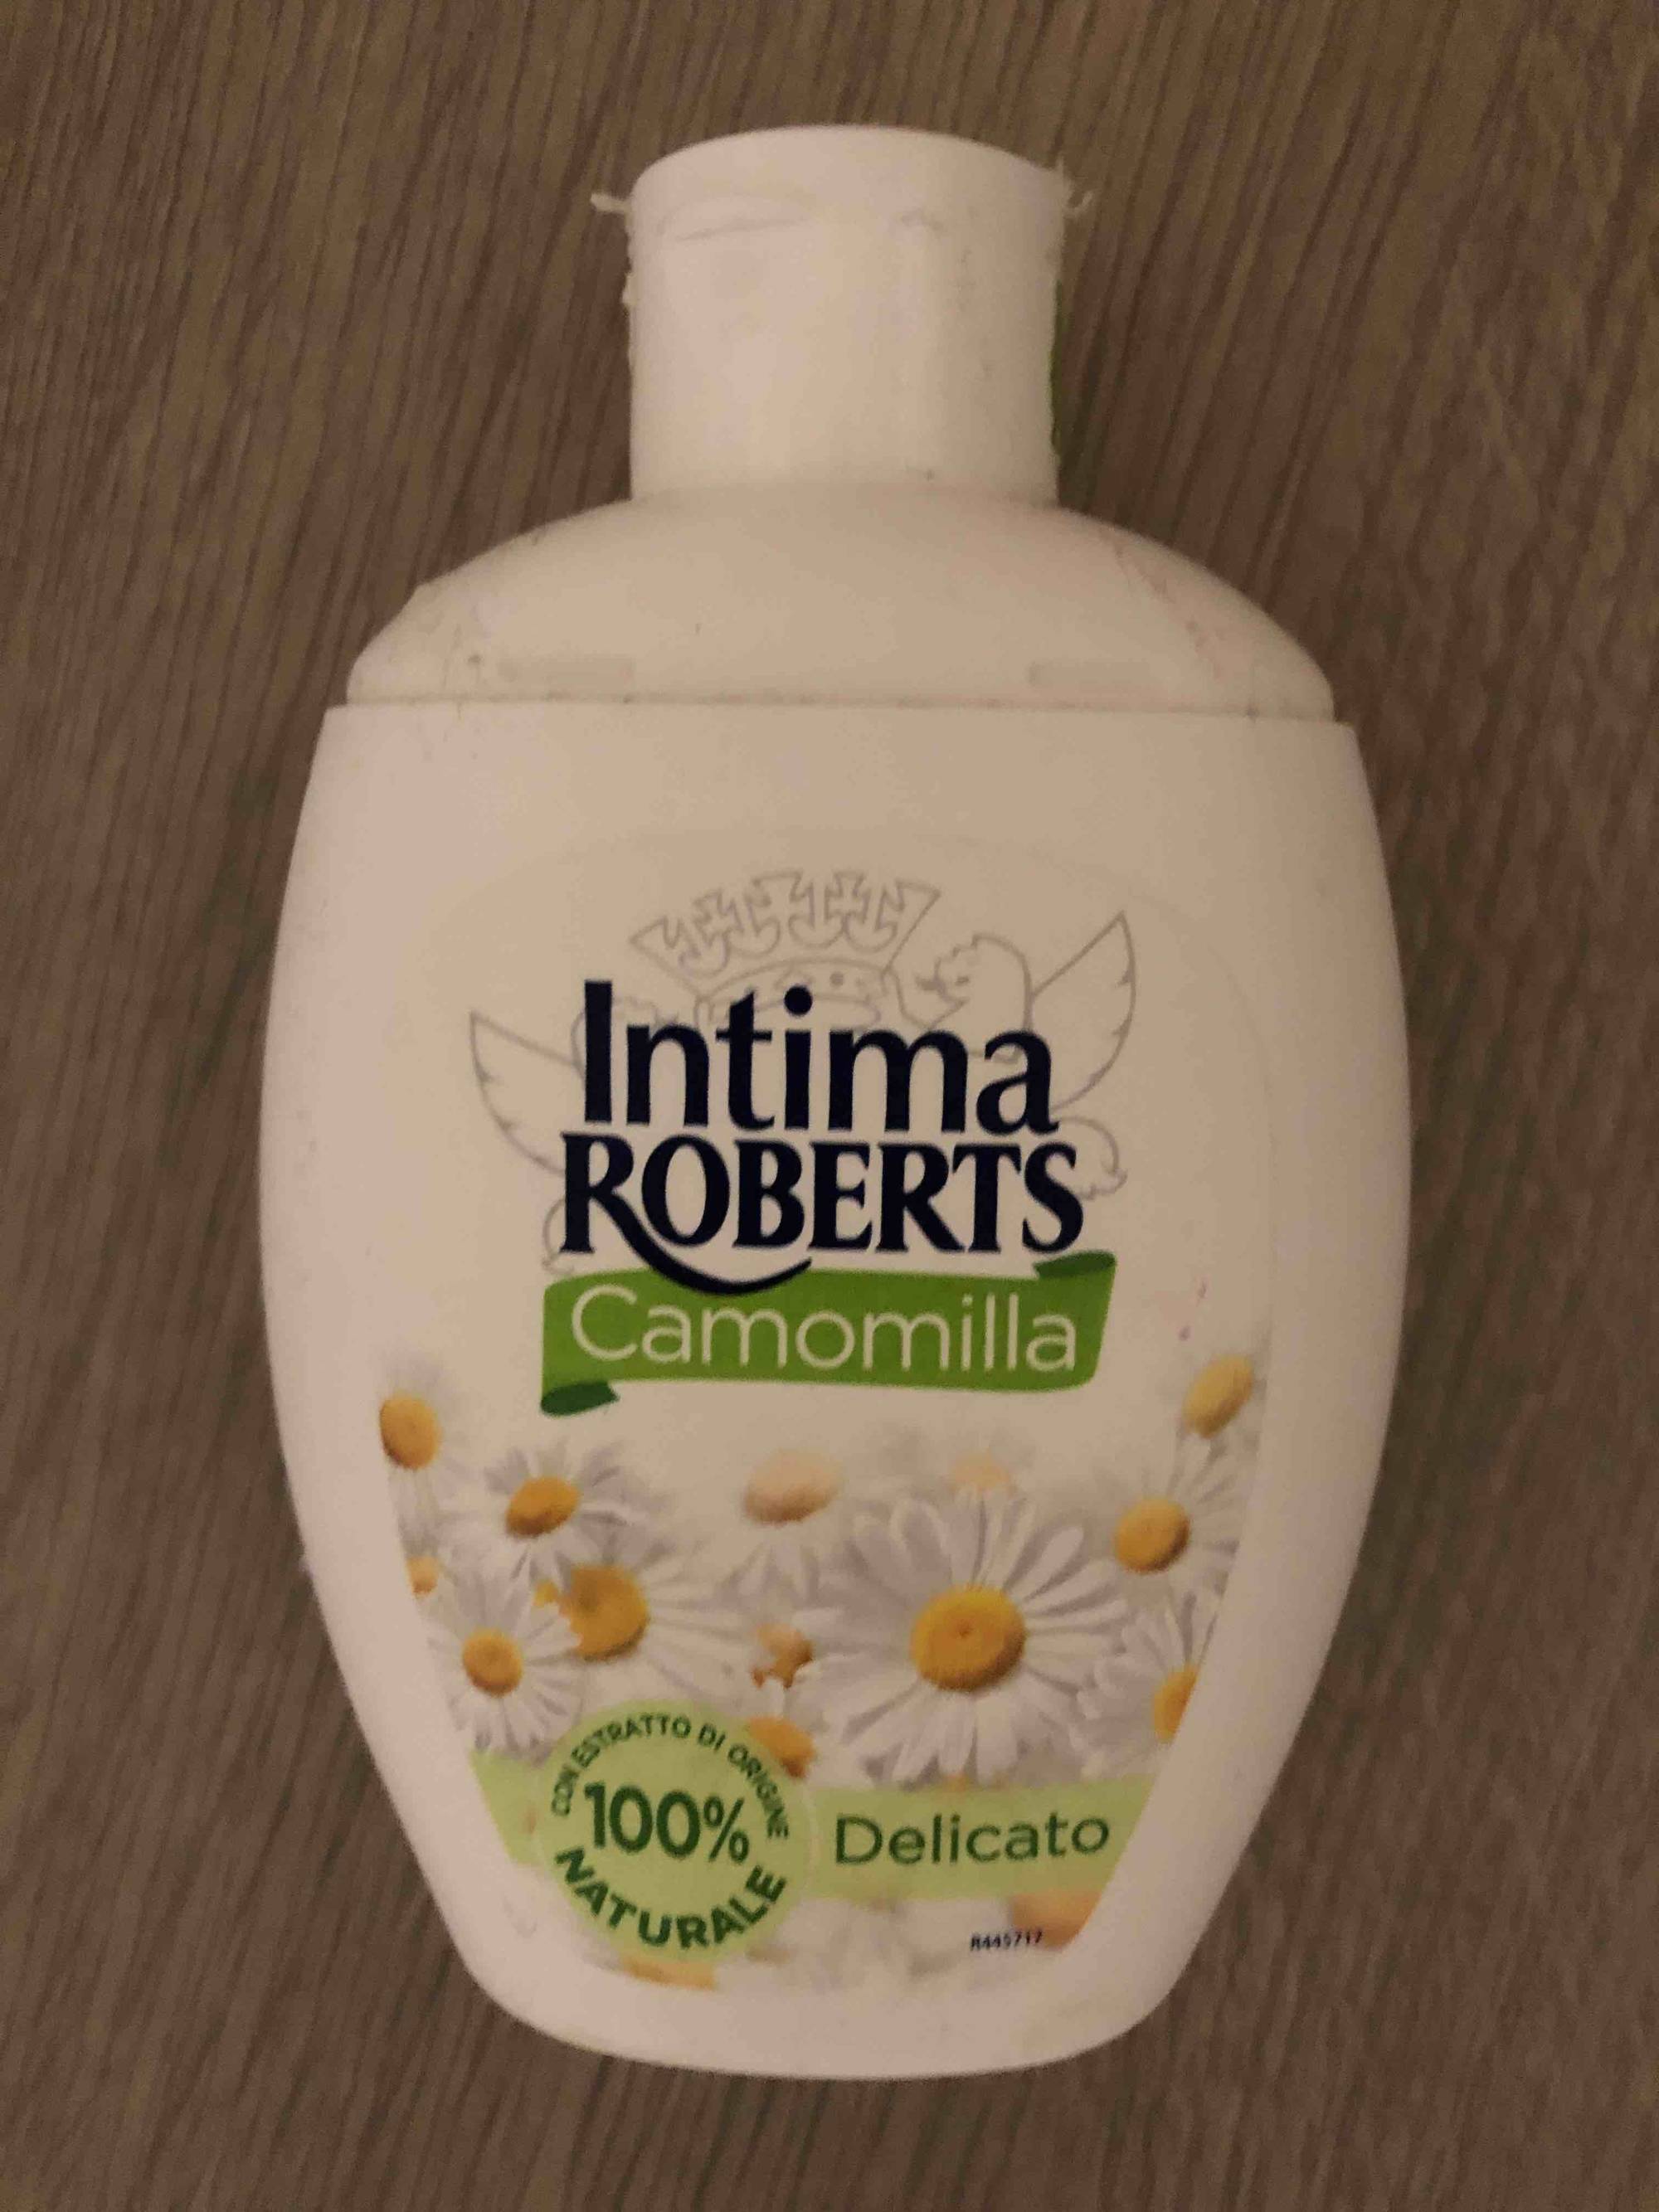 INTIMA ROBERTS - Intima Roberts camomilla